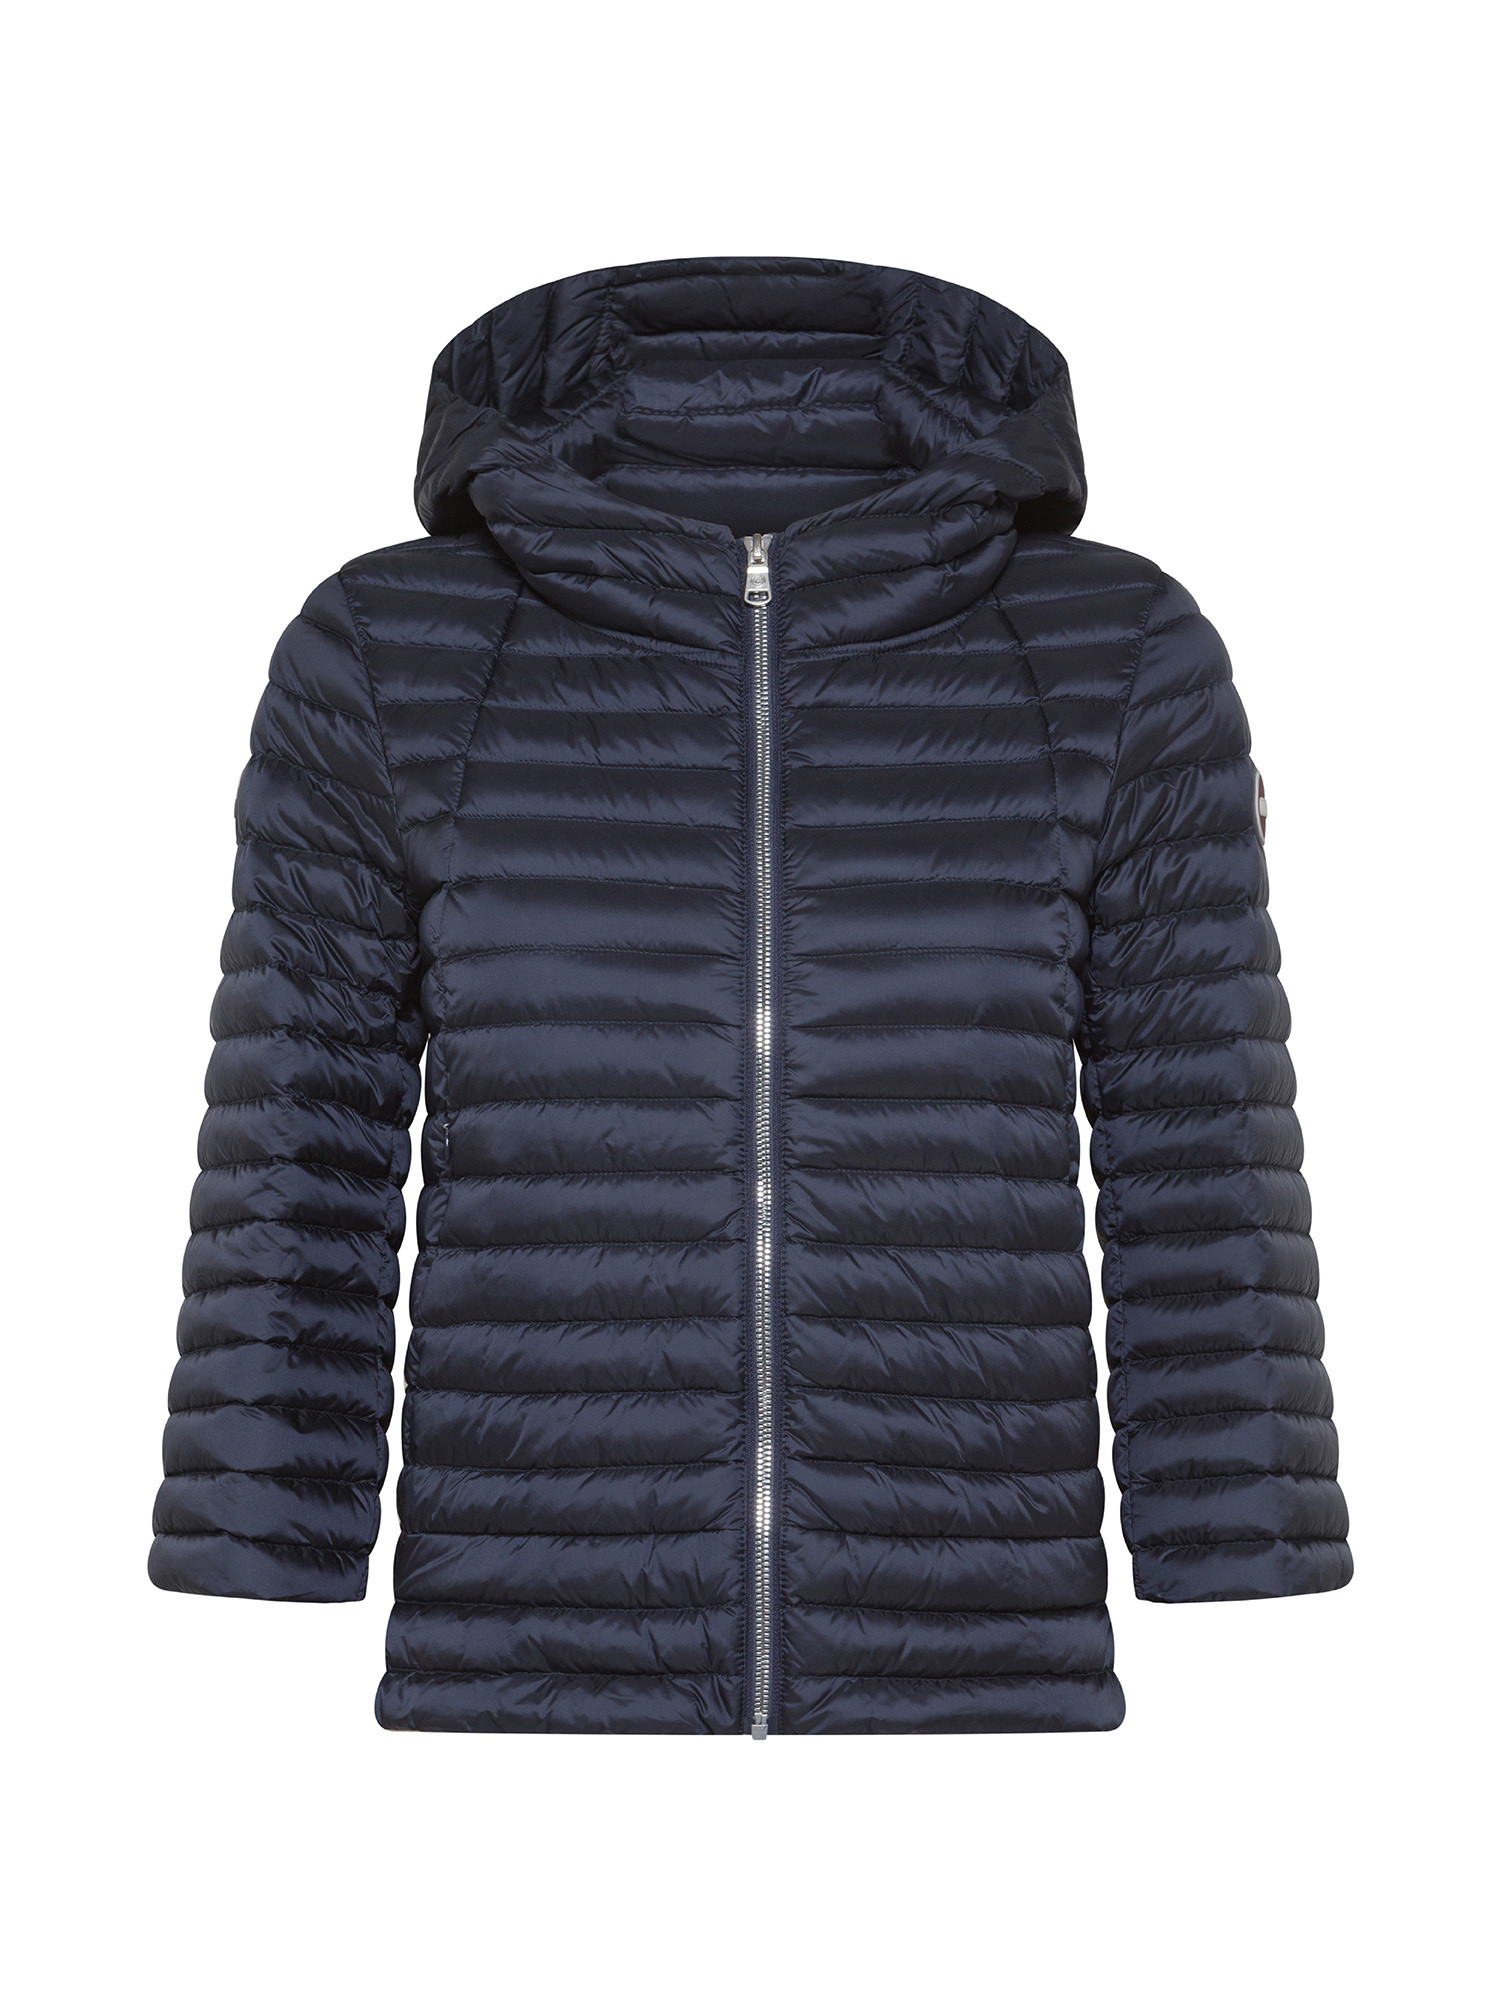 Colmar - Down jacket with hood, Dark Blue, large image number 0